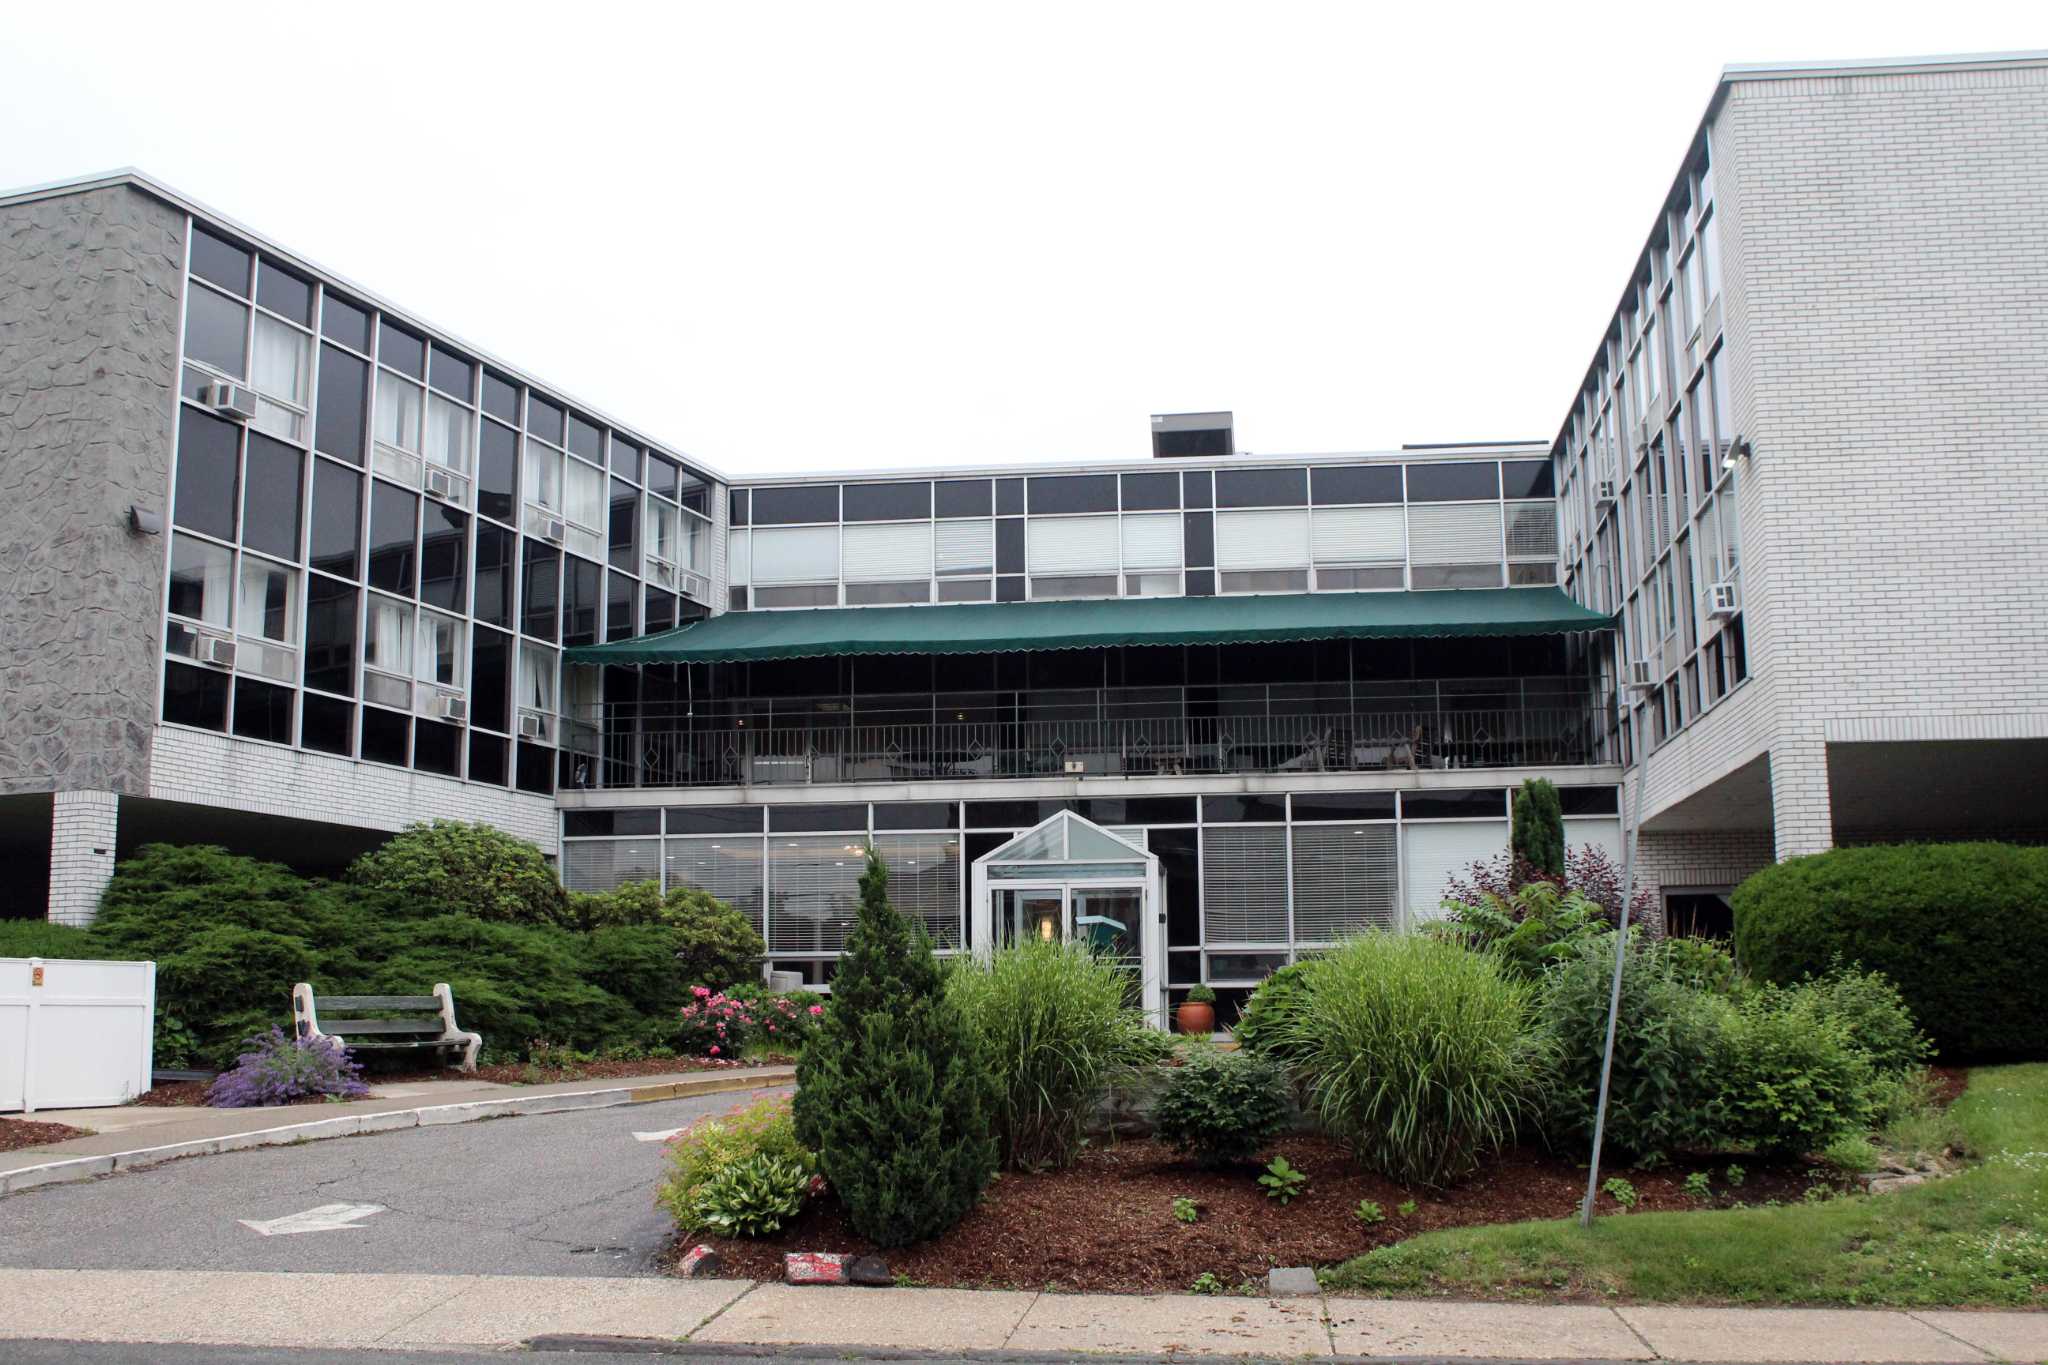 Westport rehab center closure: What we know